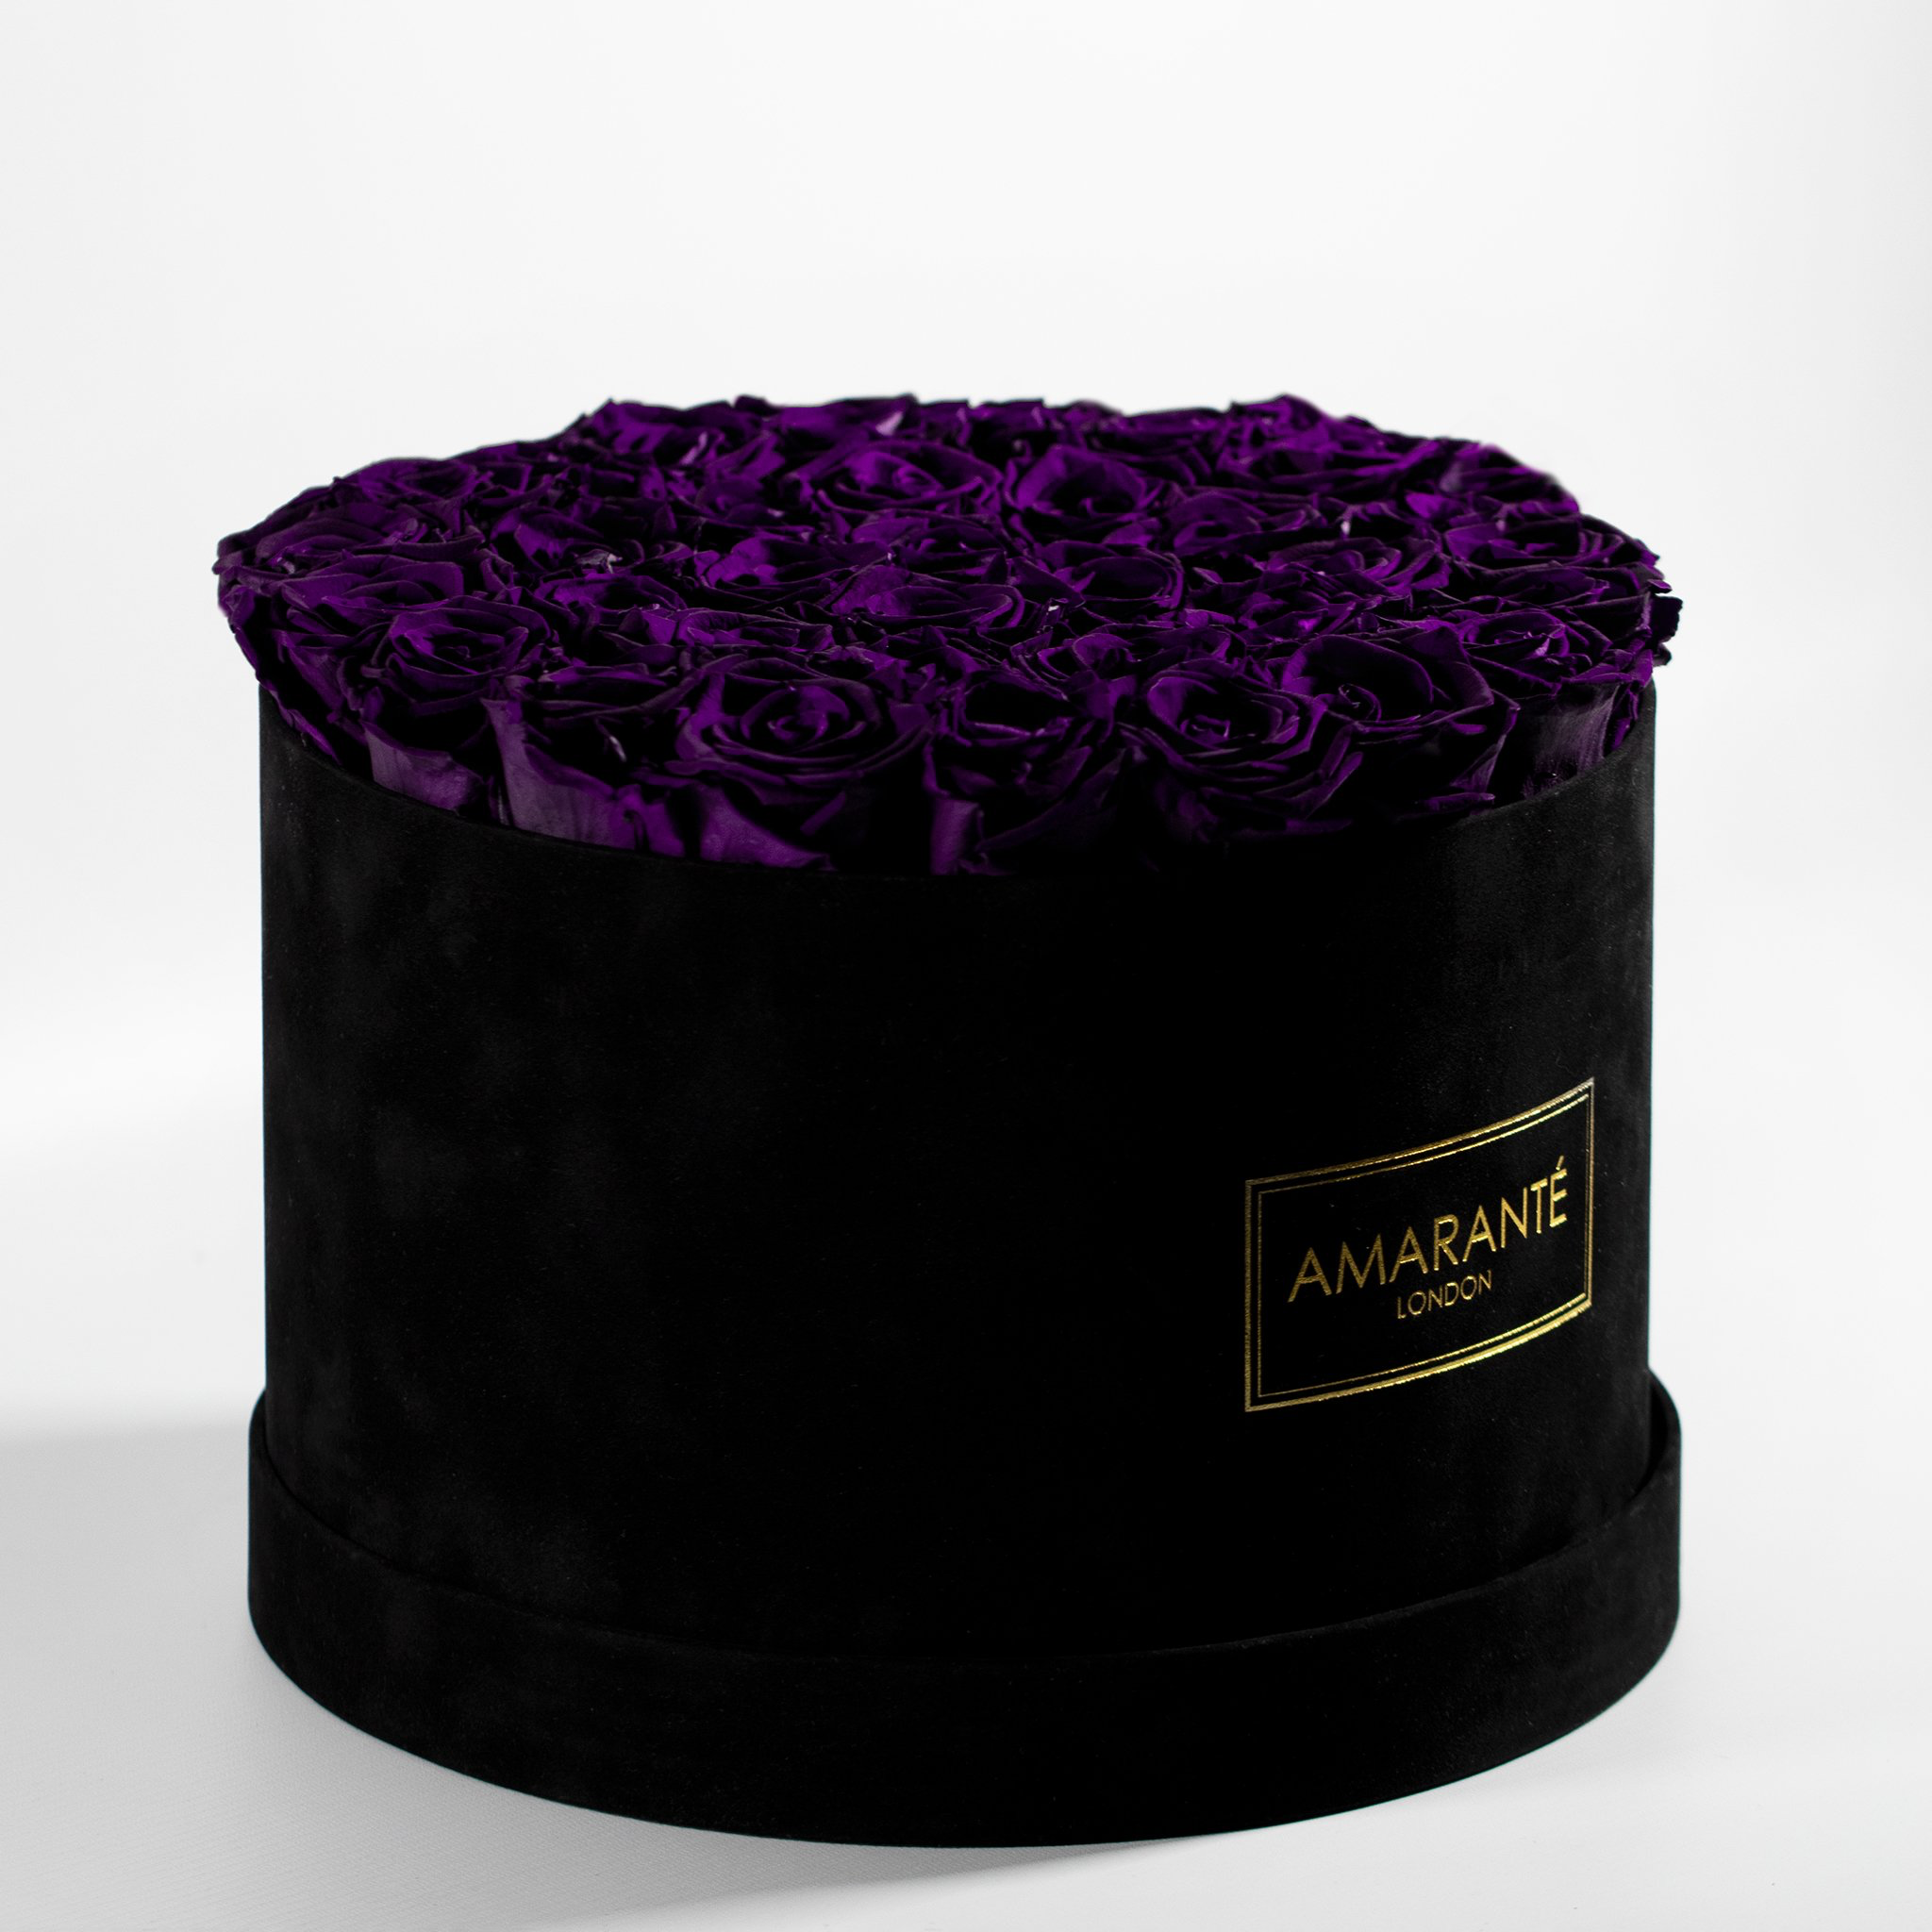 Dreamy dark purple Roses displayed in a stylish black circular box 